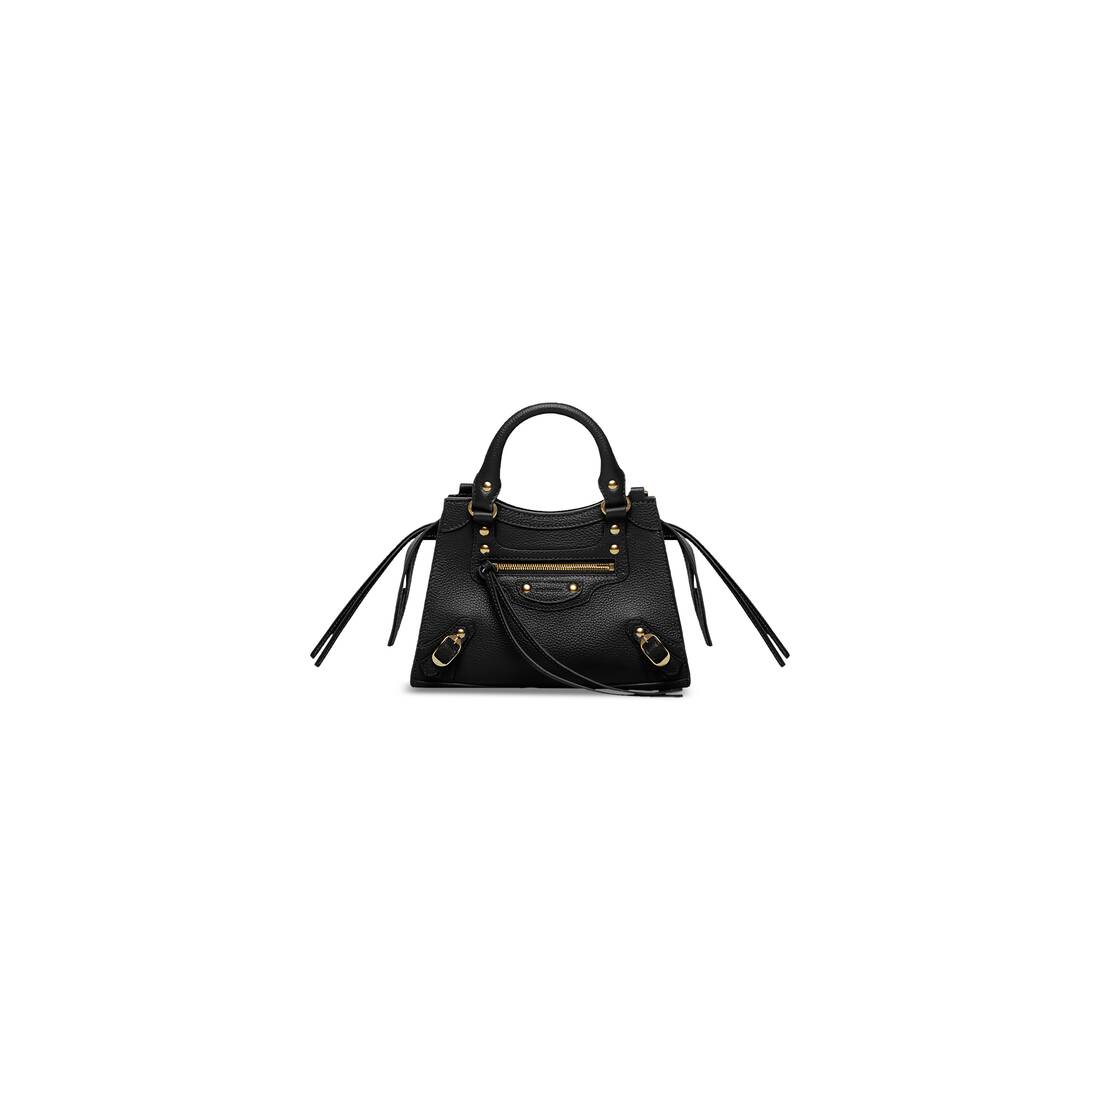 Women's Neo Classic Mini Handbag in Black/white